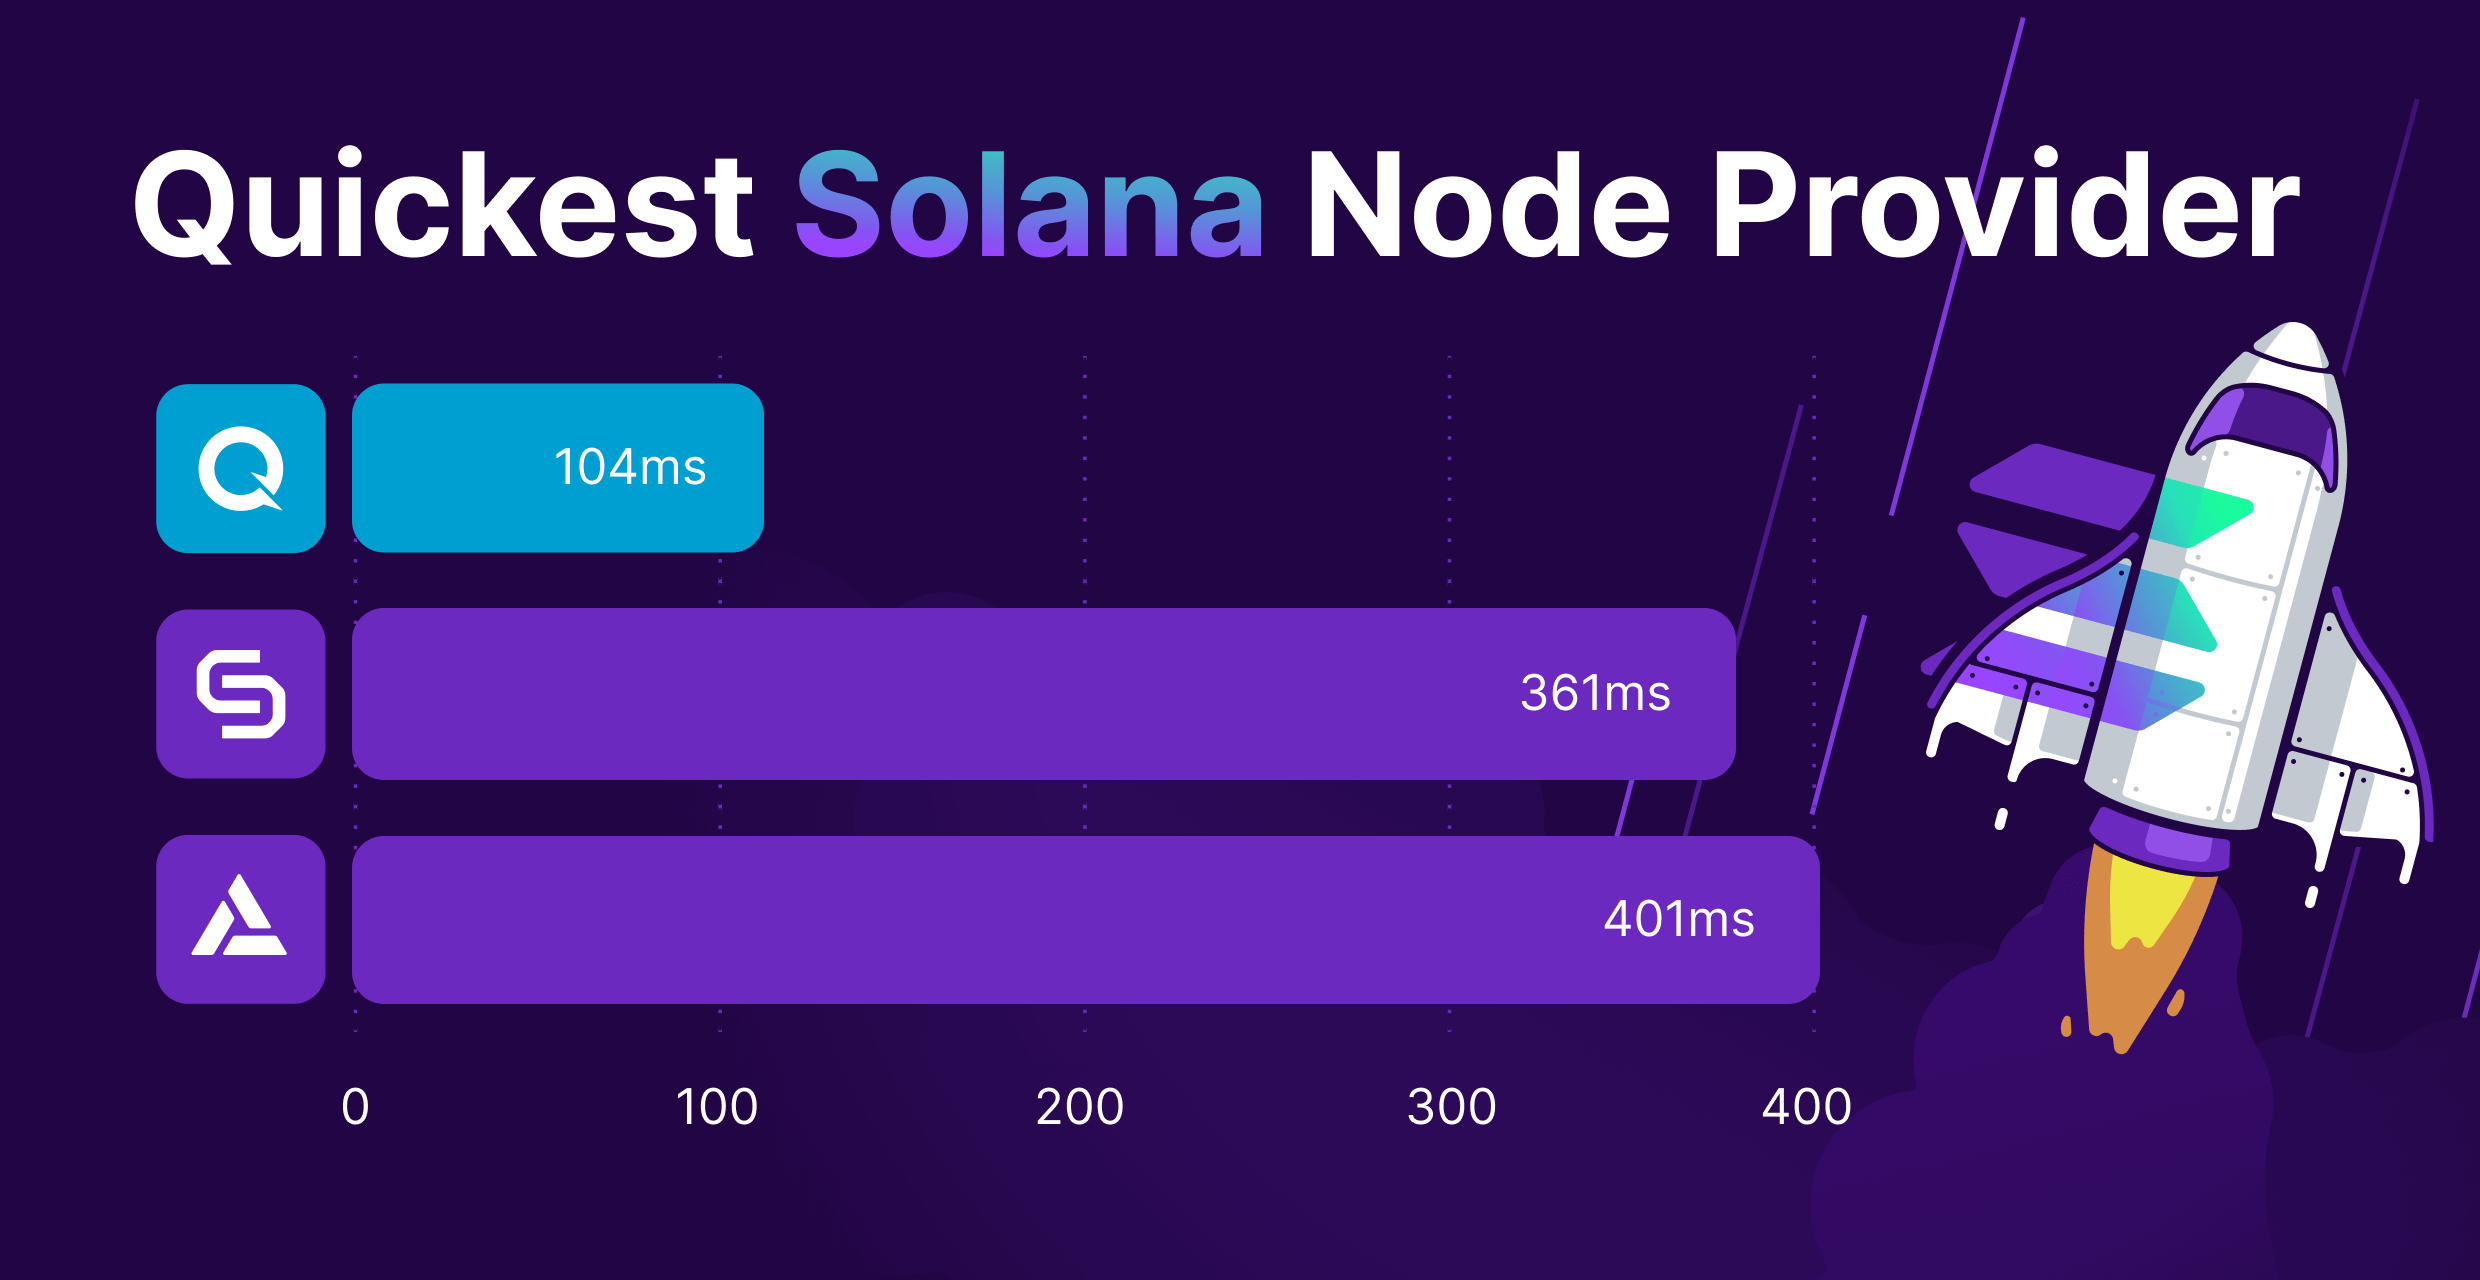 QuickNode: The Quickest Solana Node Provider